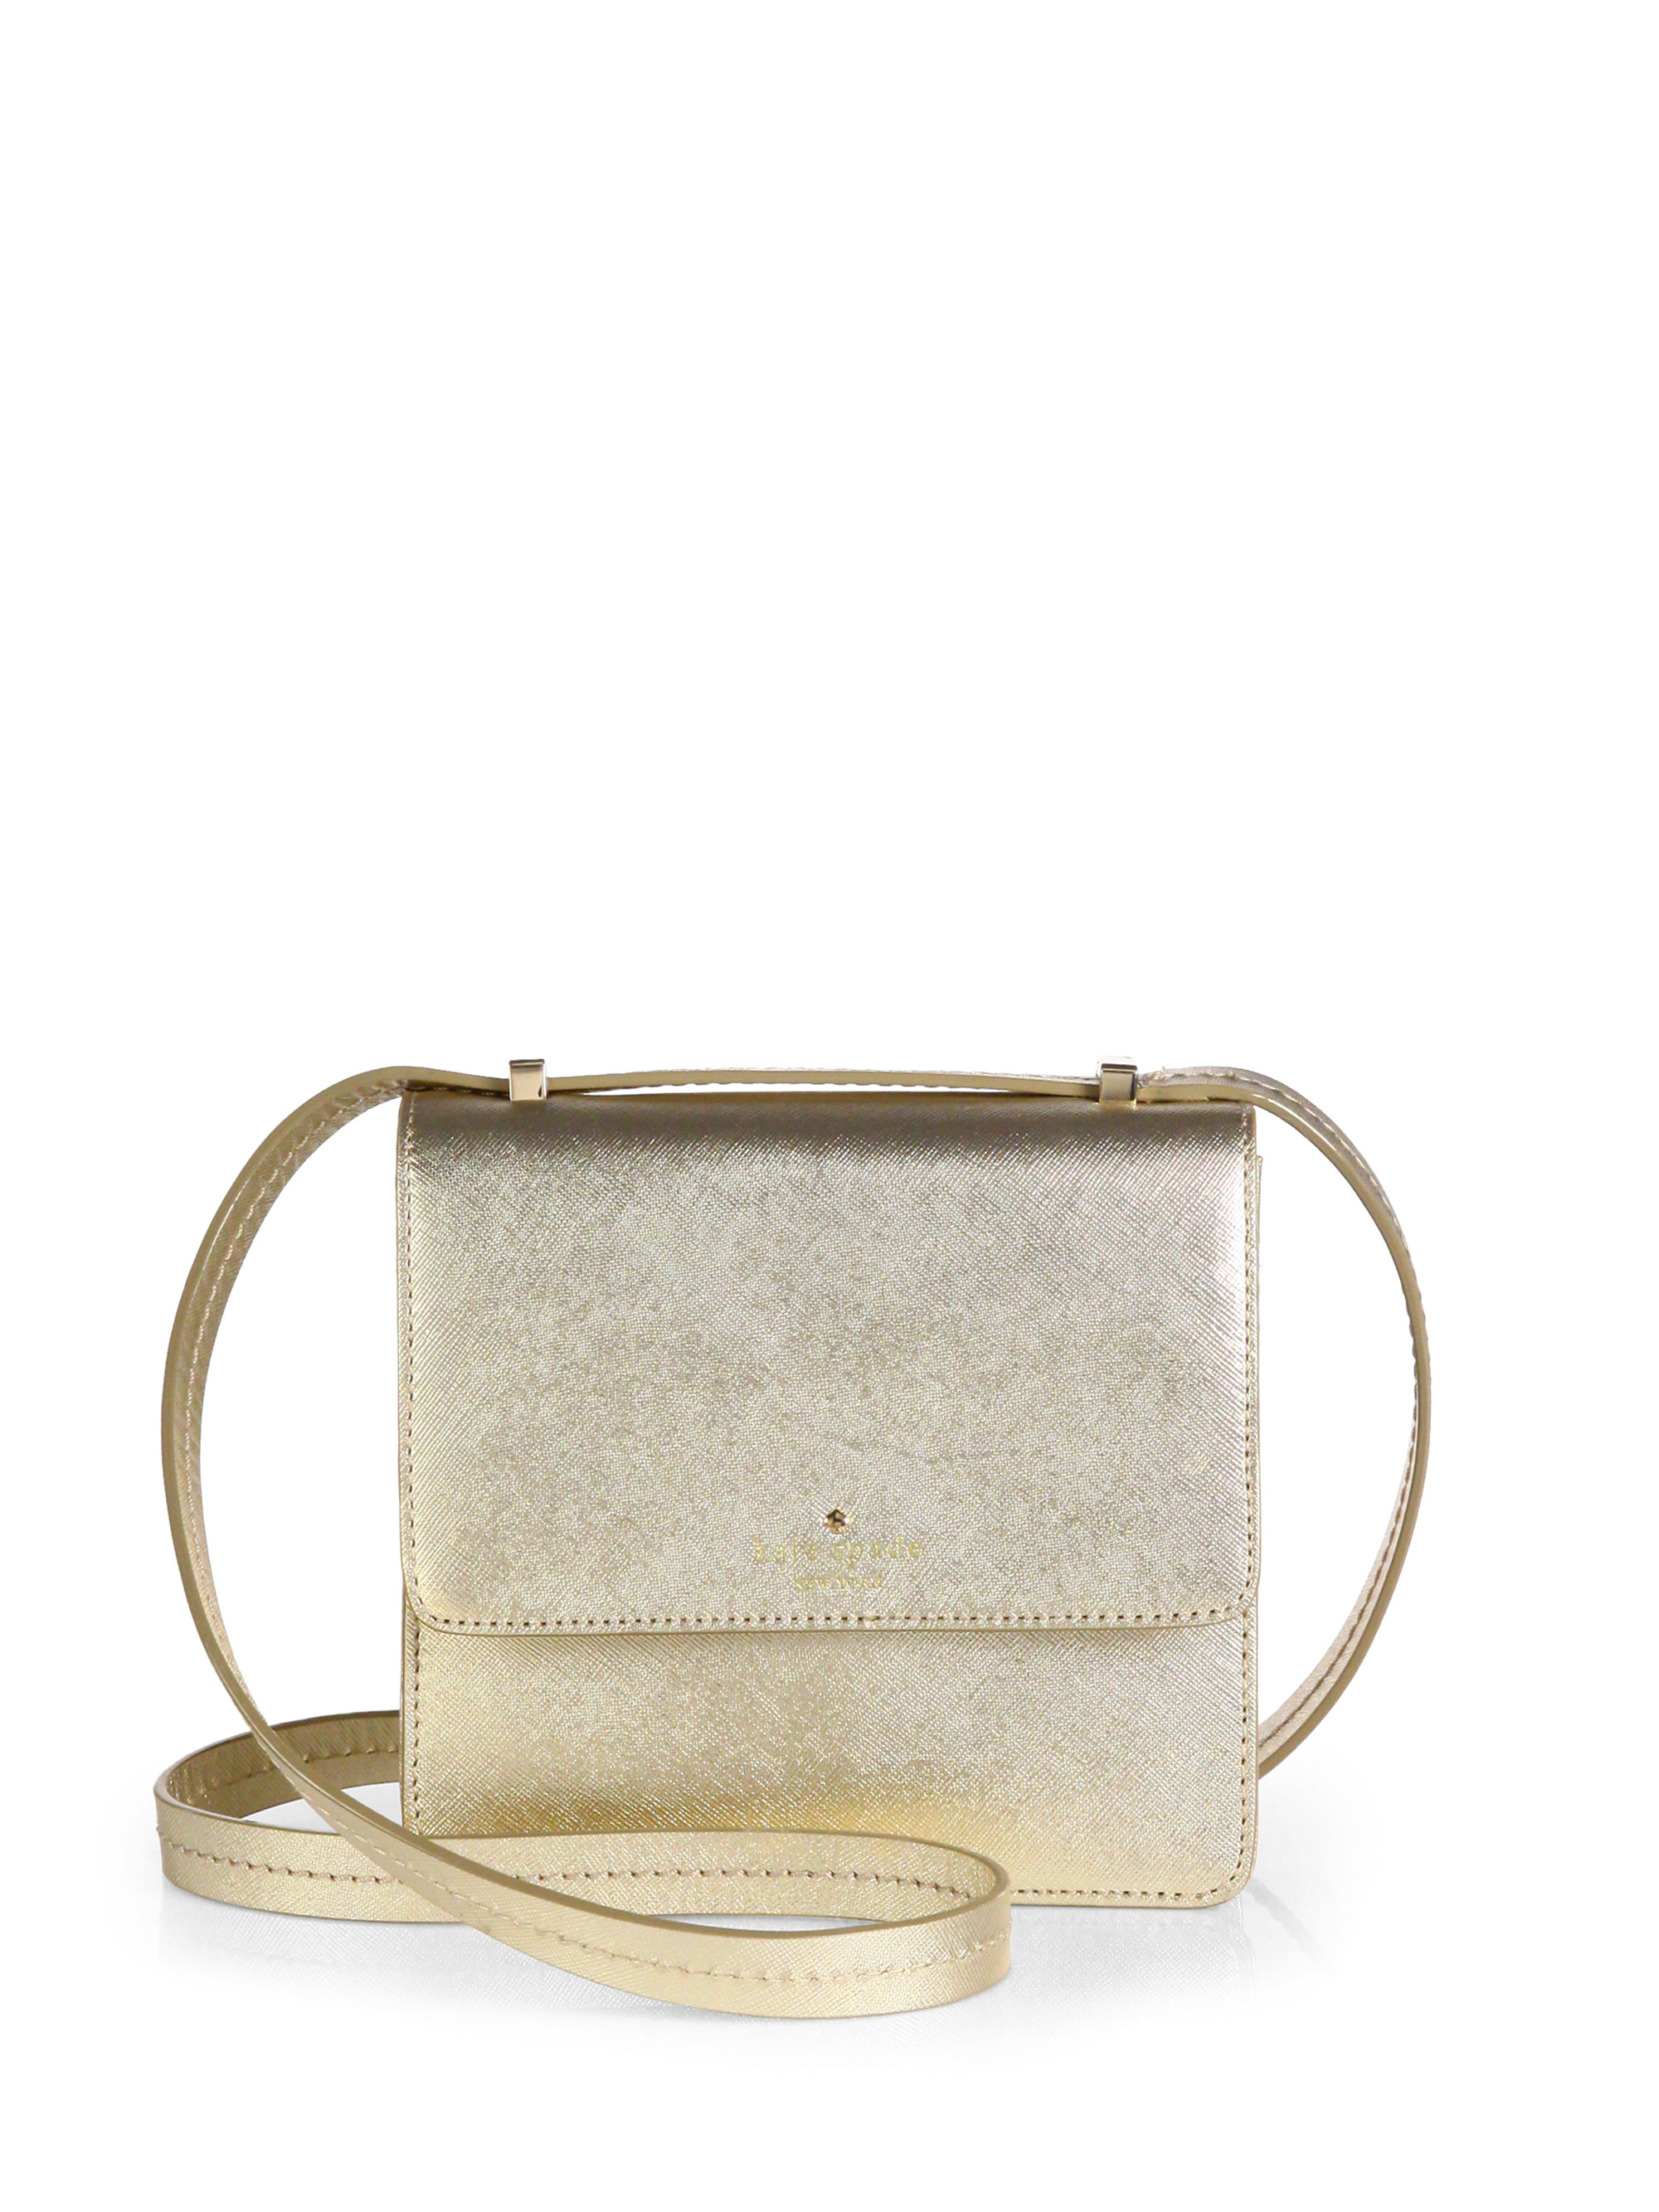 Kate Spade Niconico Metallic Leather Crossbody Bag in Gold | Lyst